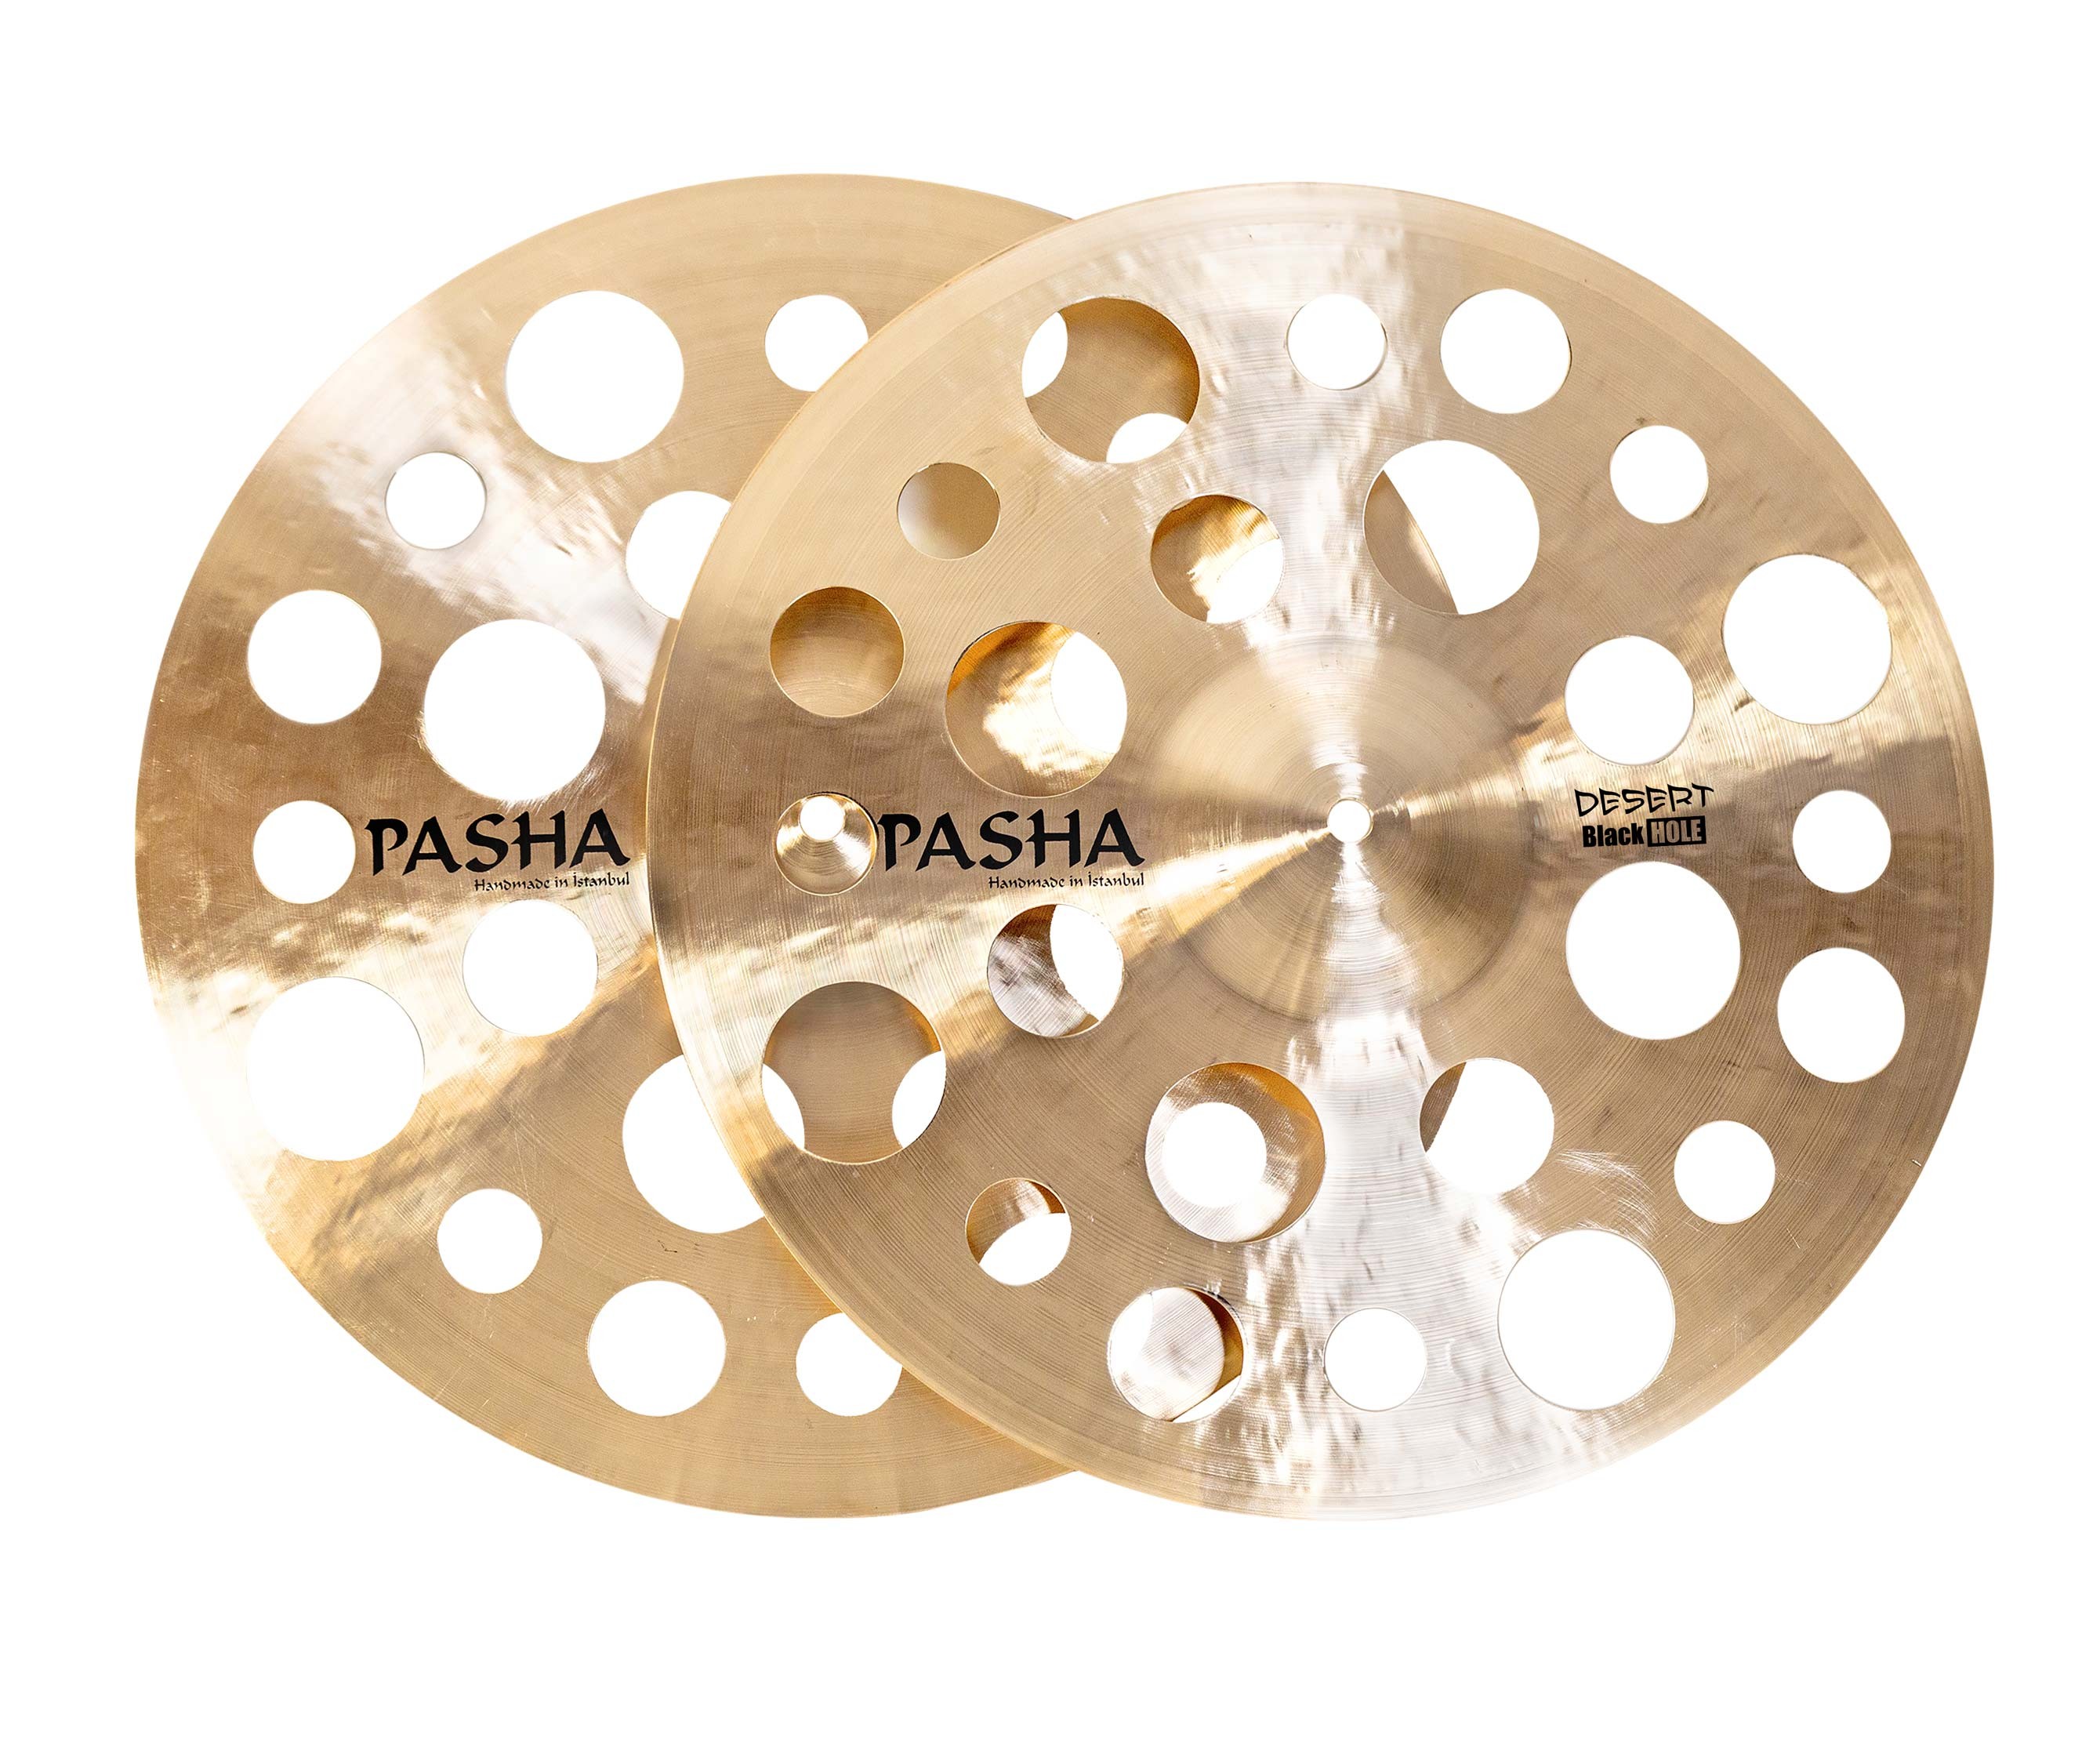 PASHA Pasha Desert Black Hole Hi-hat 16'' DBH-H16